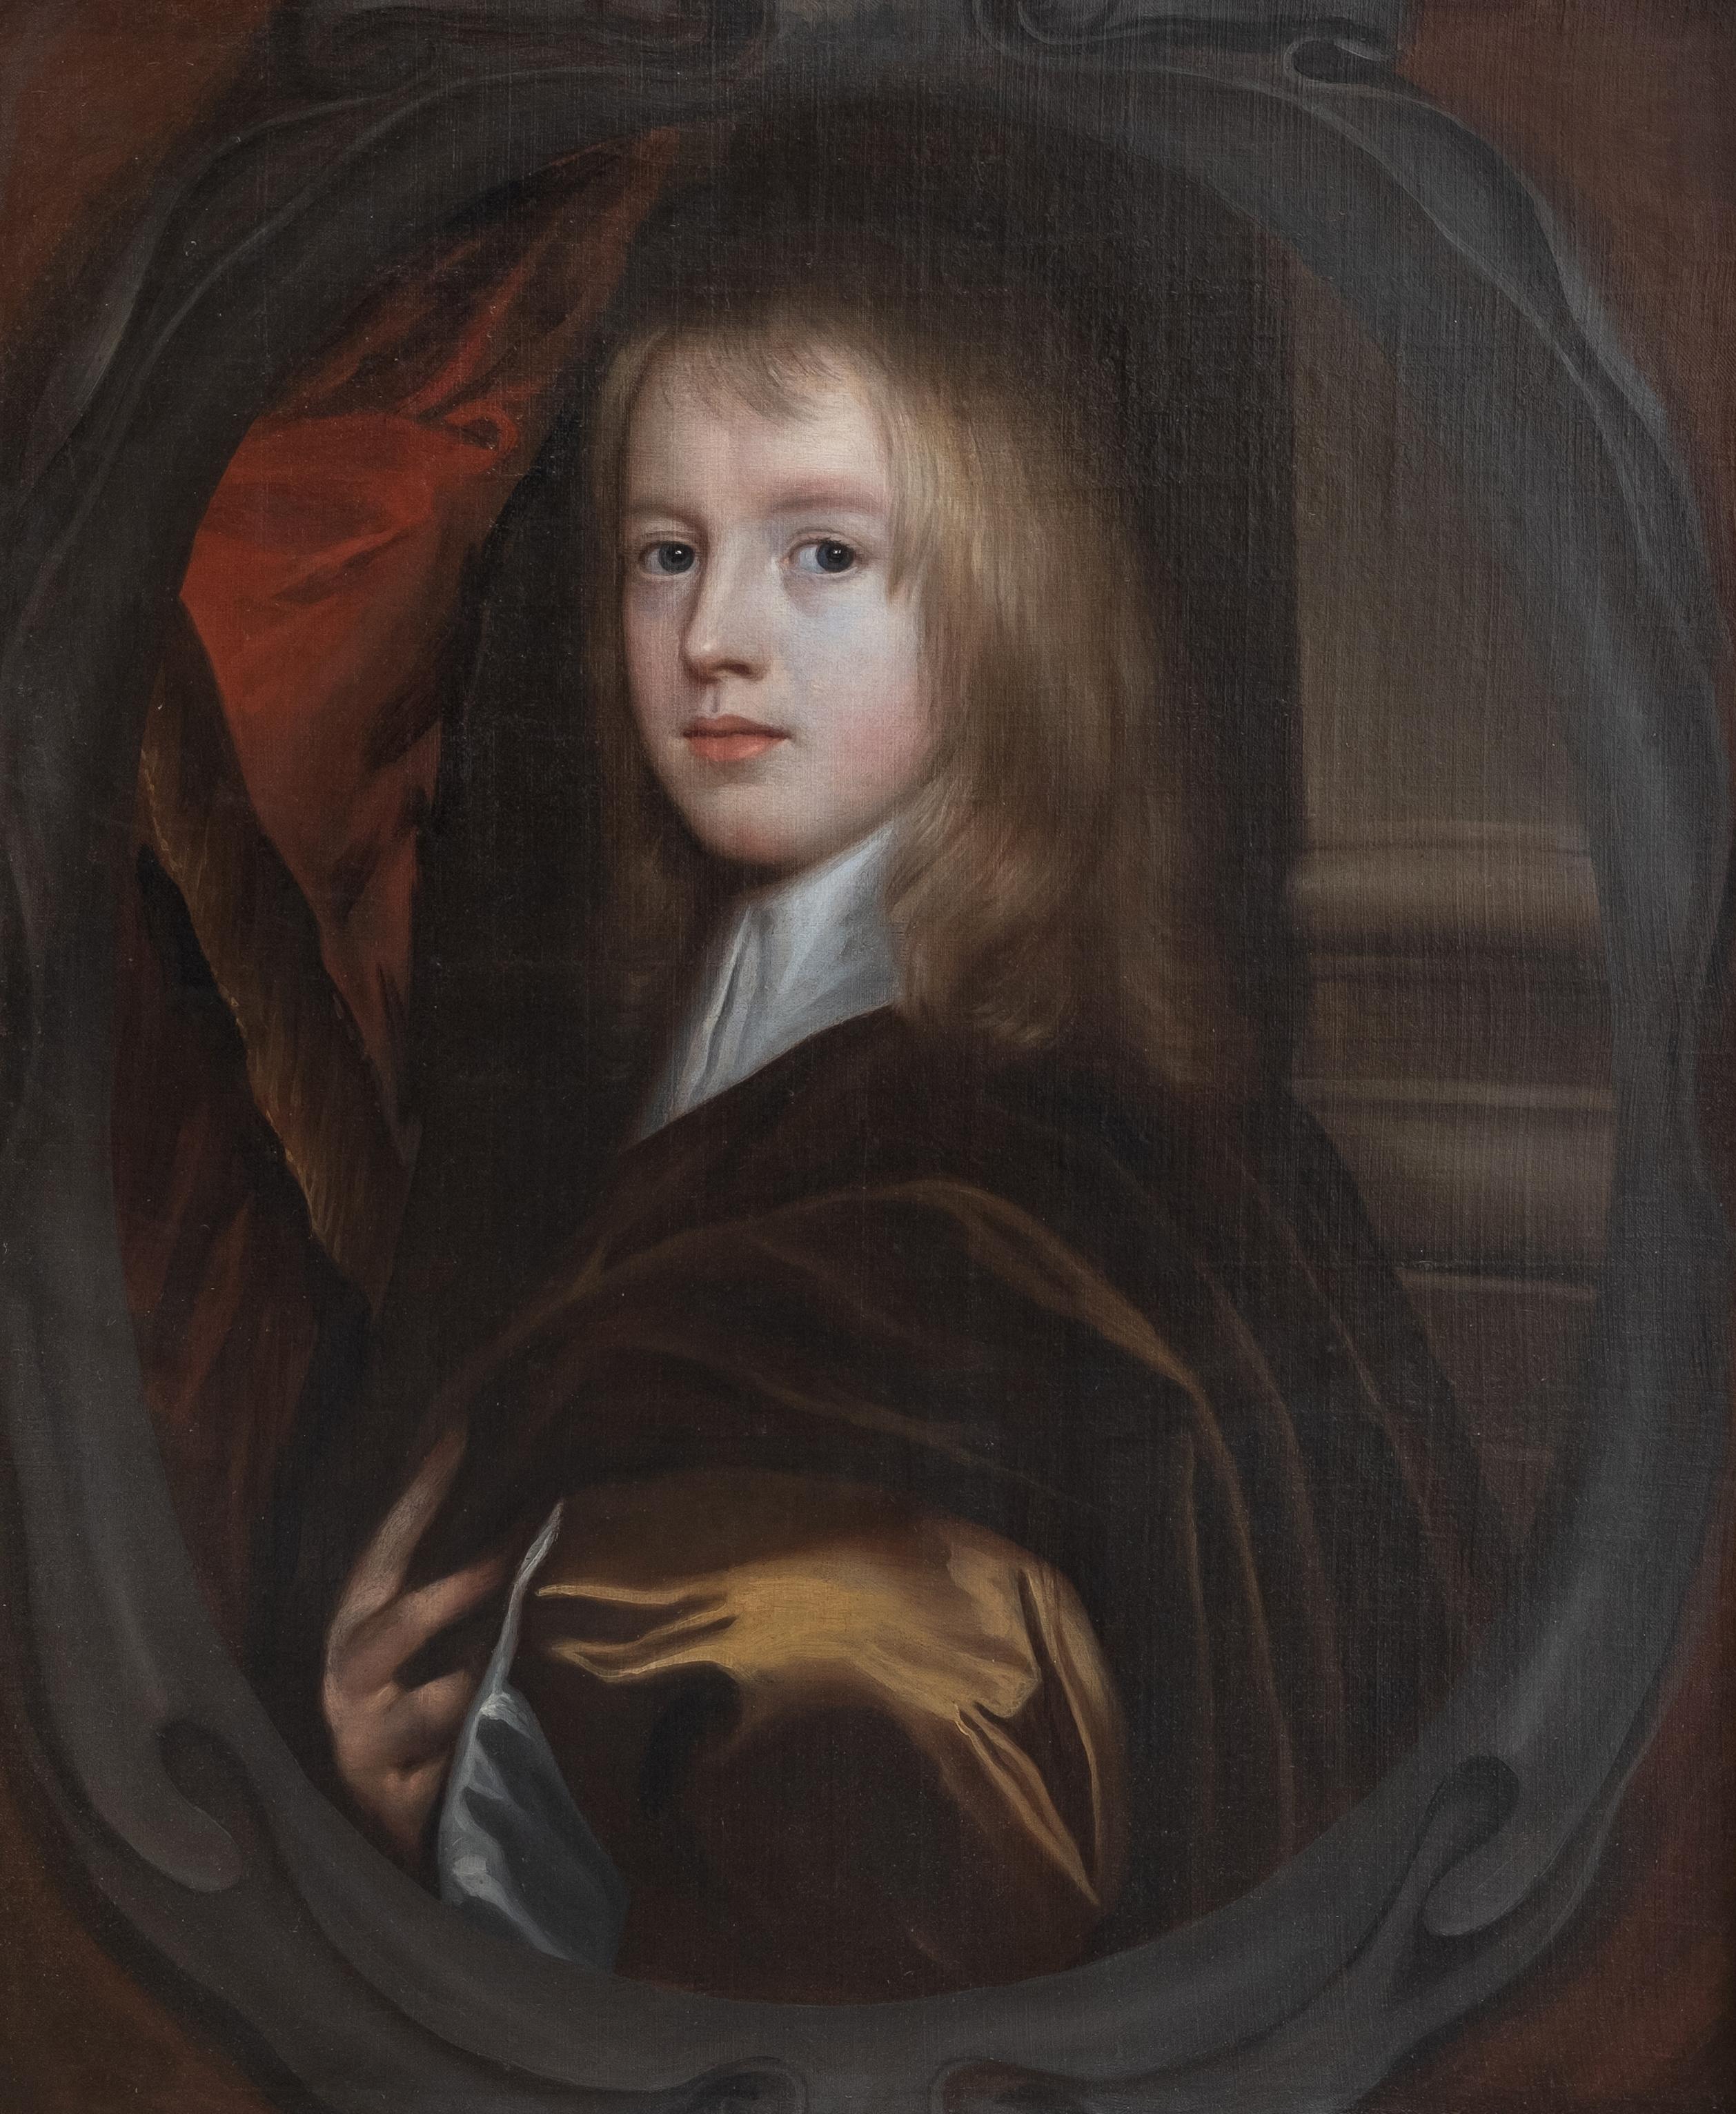 17th century boy